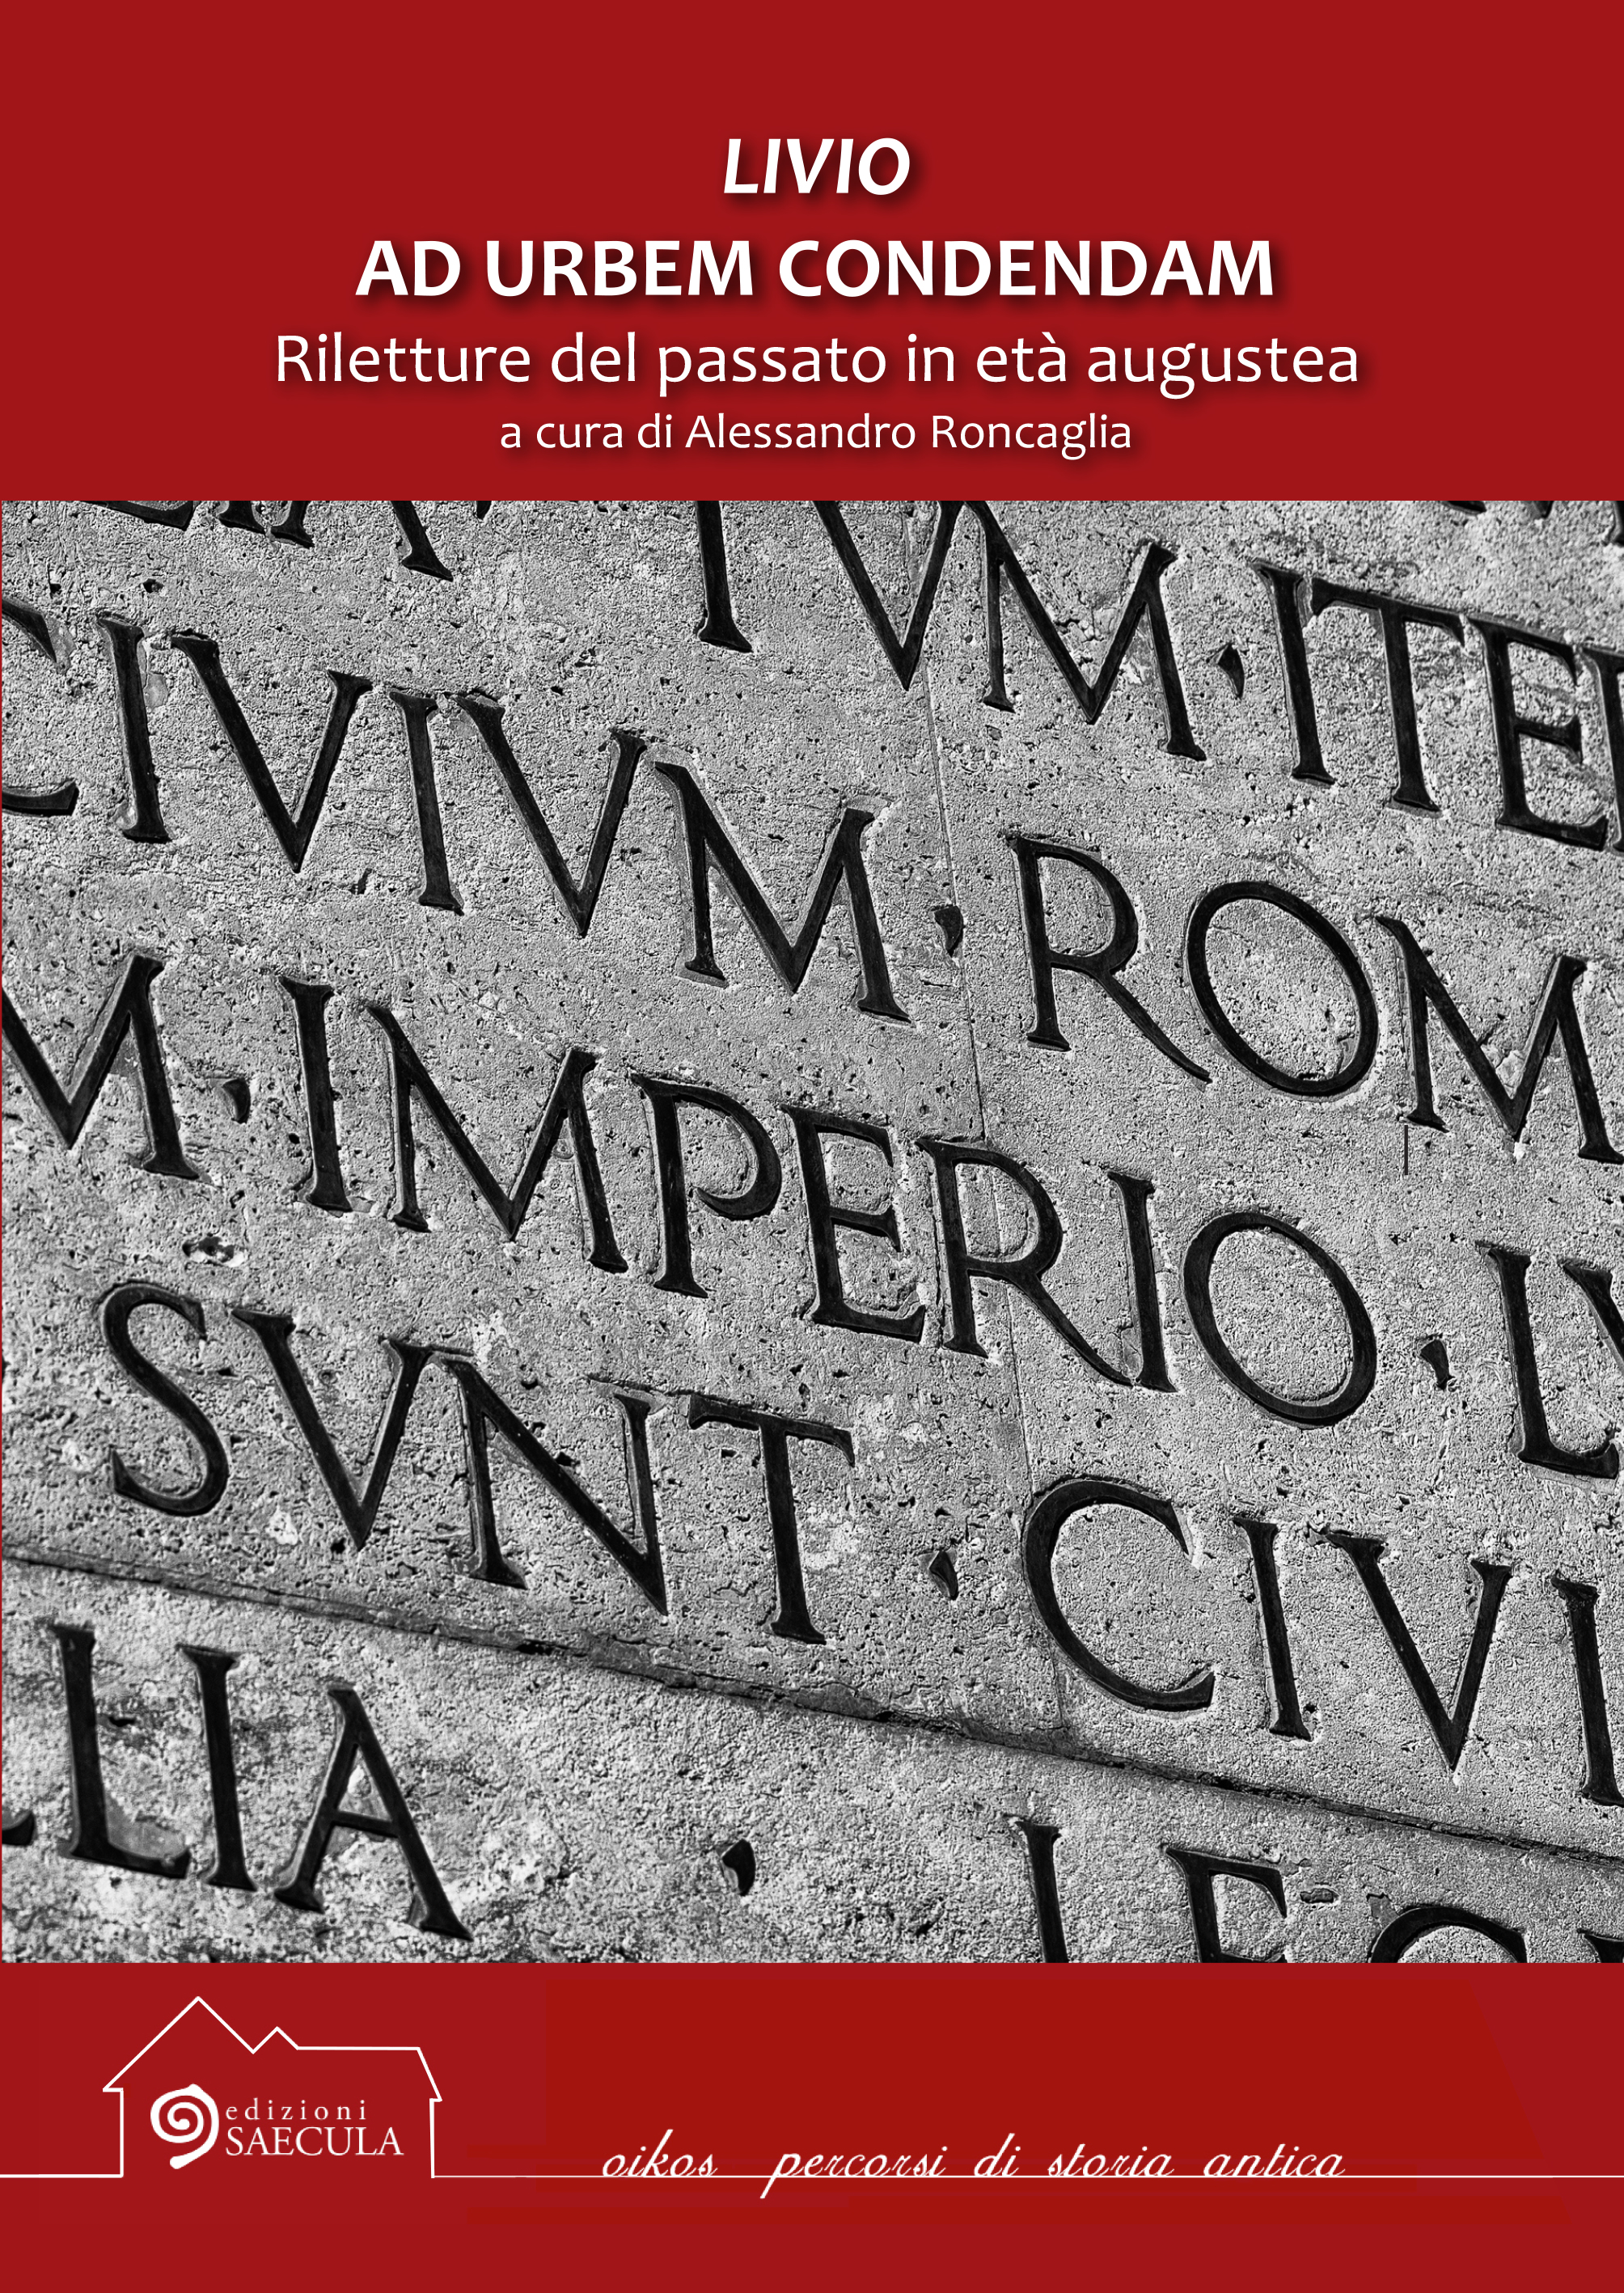 Livio Ad urbem condendam - Riletture del passato in età augustea